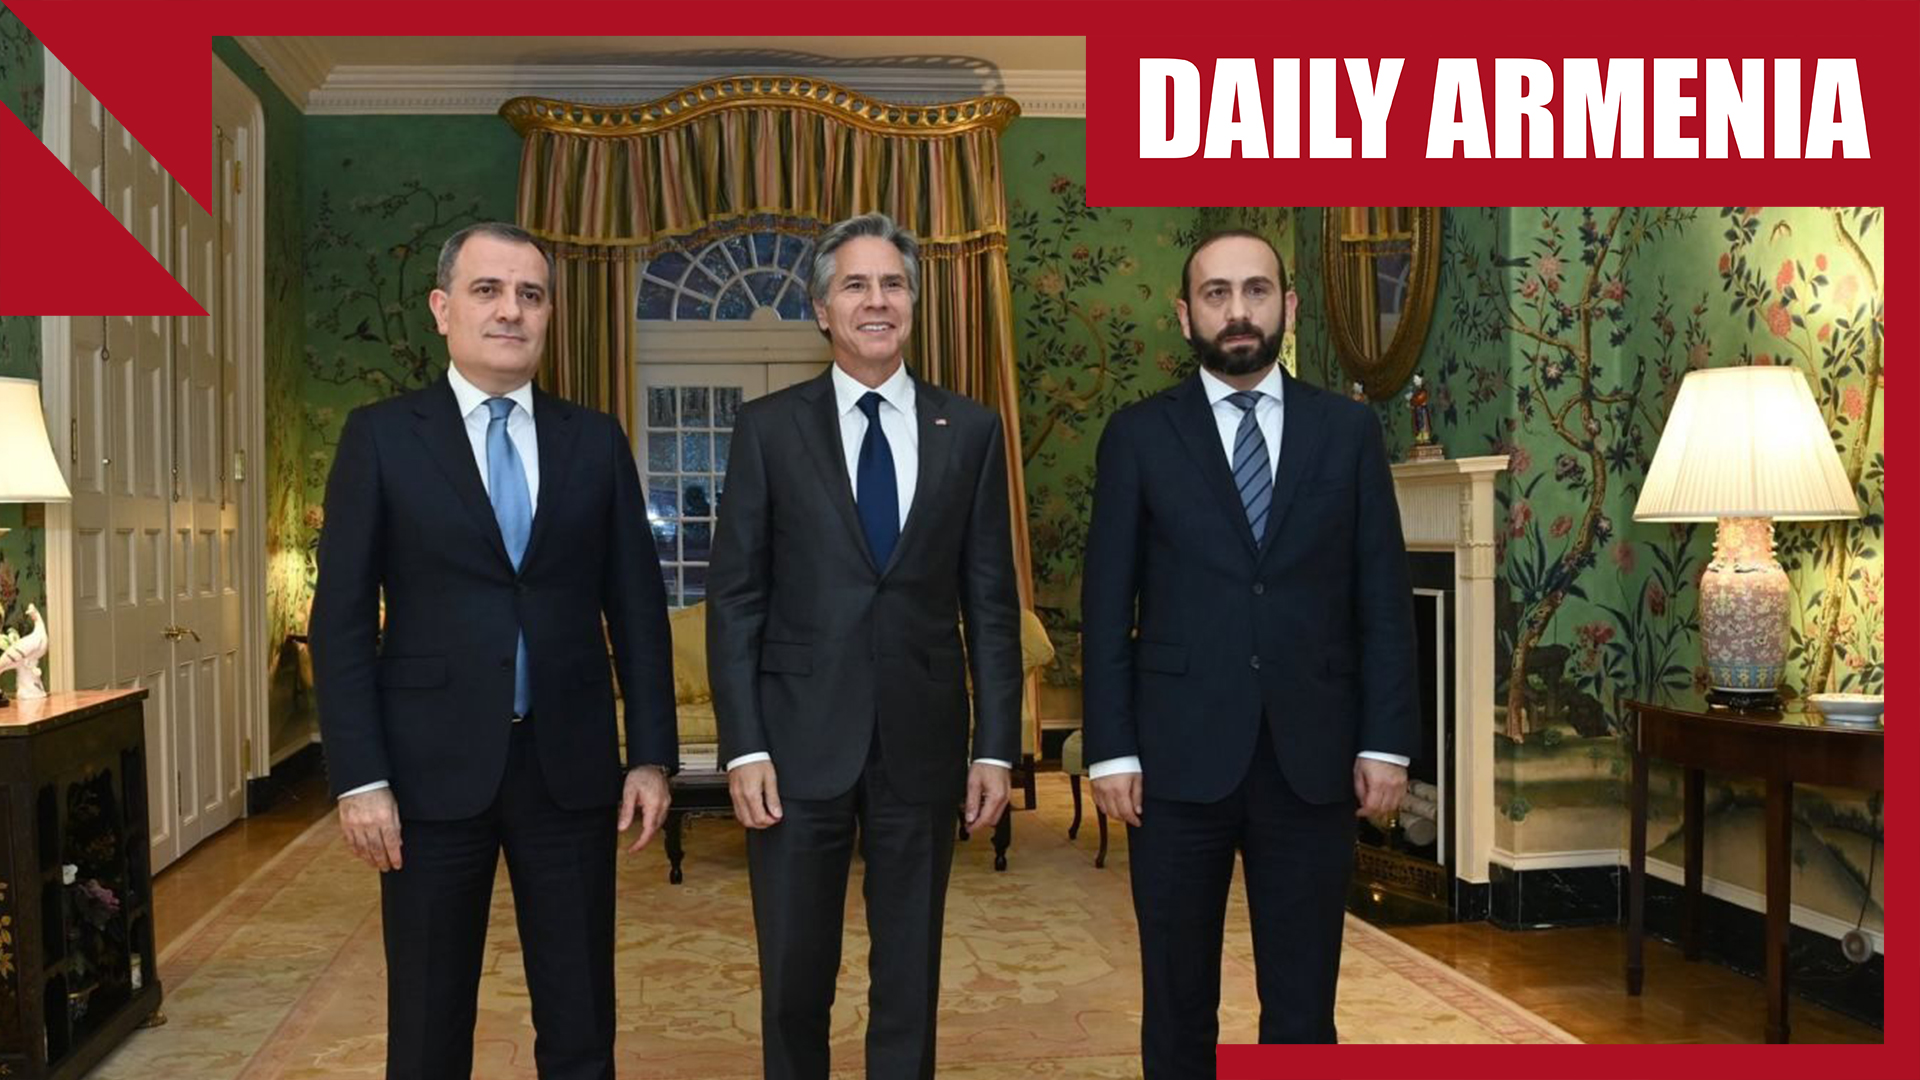 Top diplomats from Armenia and Azerbaijan phone Washington